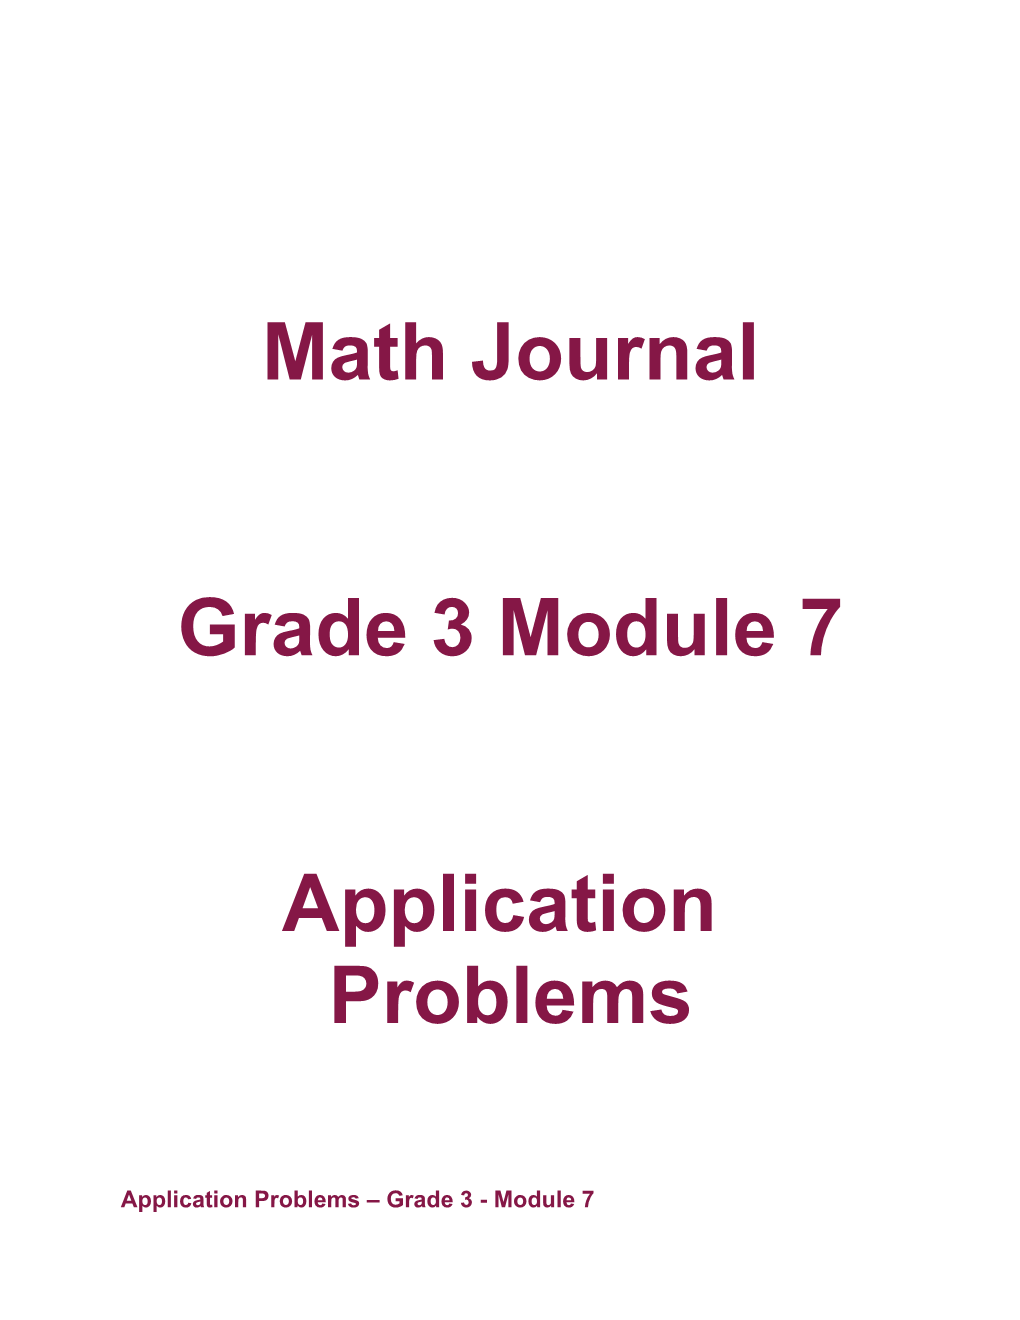 Application Problems Grade 3 - Module 7